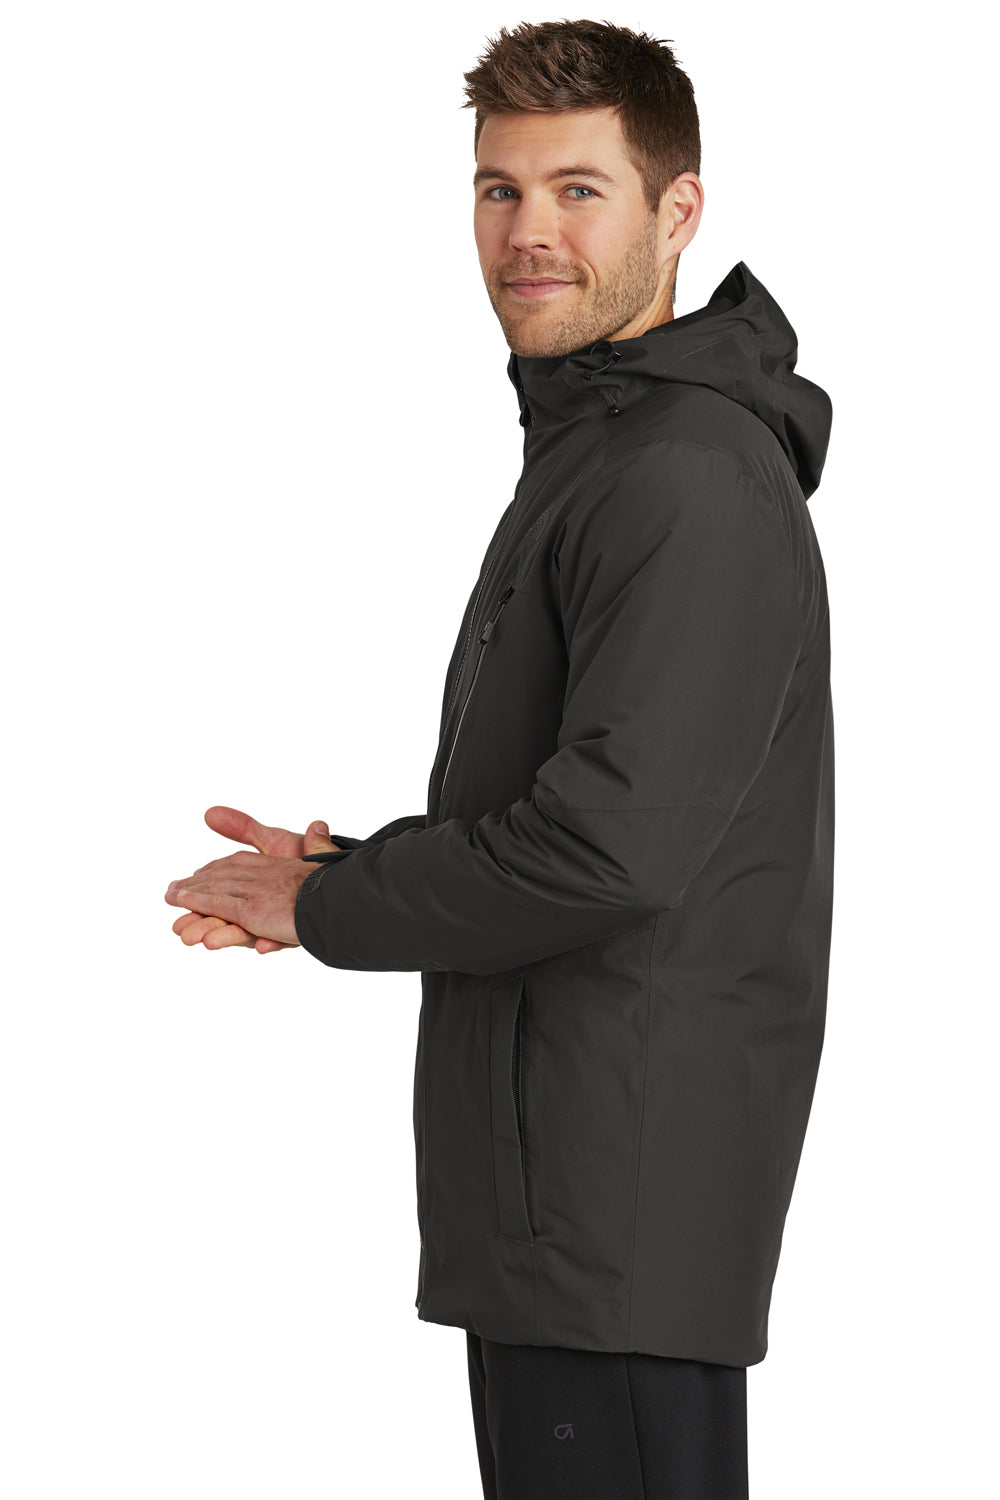 The North Face NF0A3SES Mens Ascendent Waterproof Full Zip Hooded Jacket Asphalt Grey Side